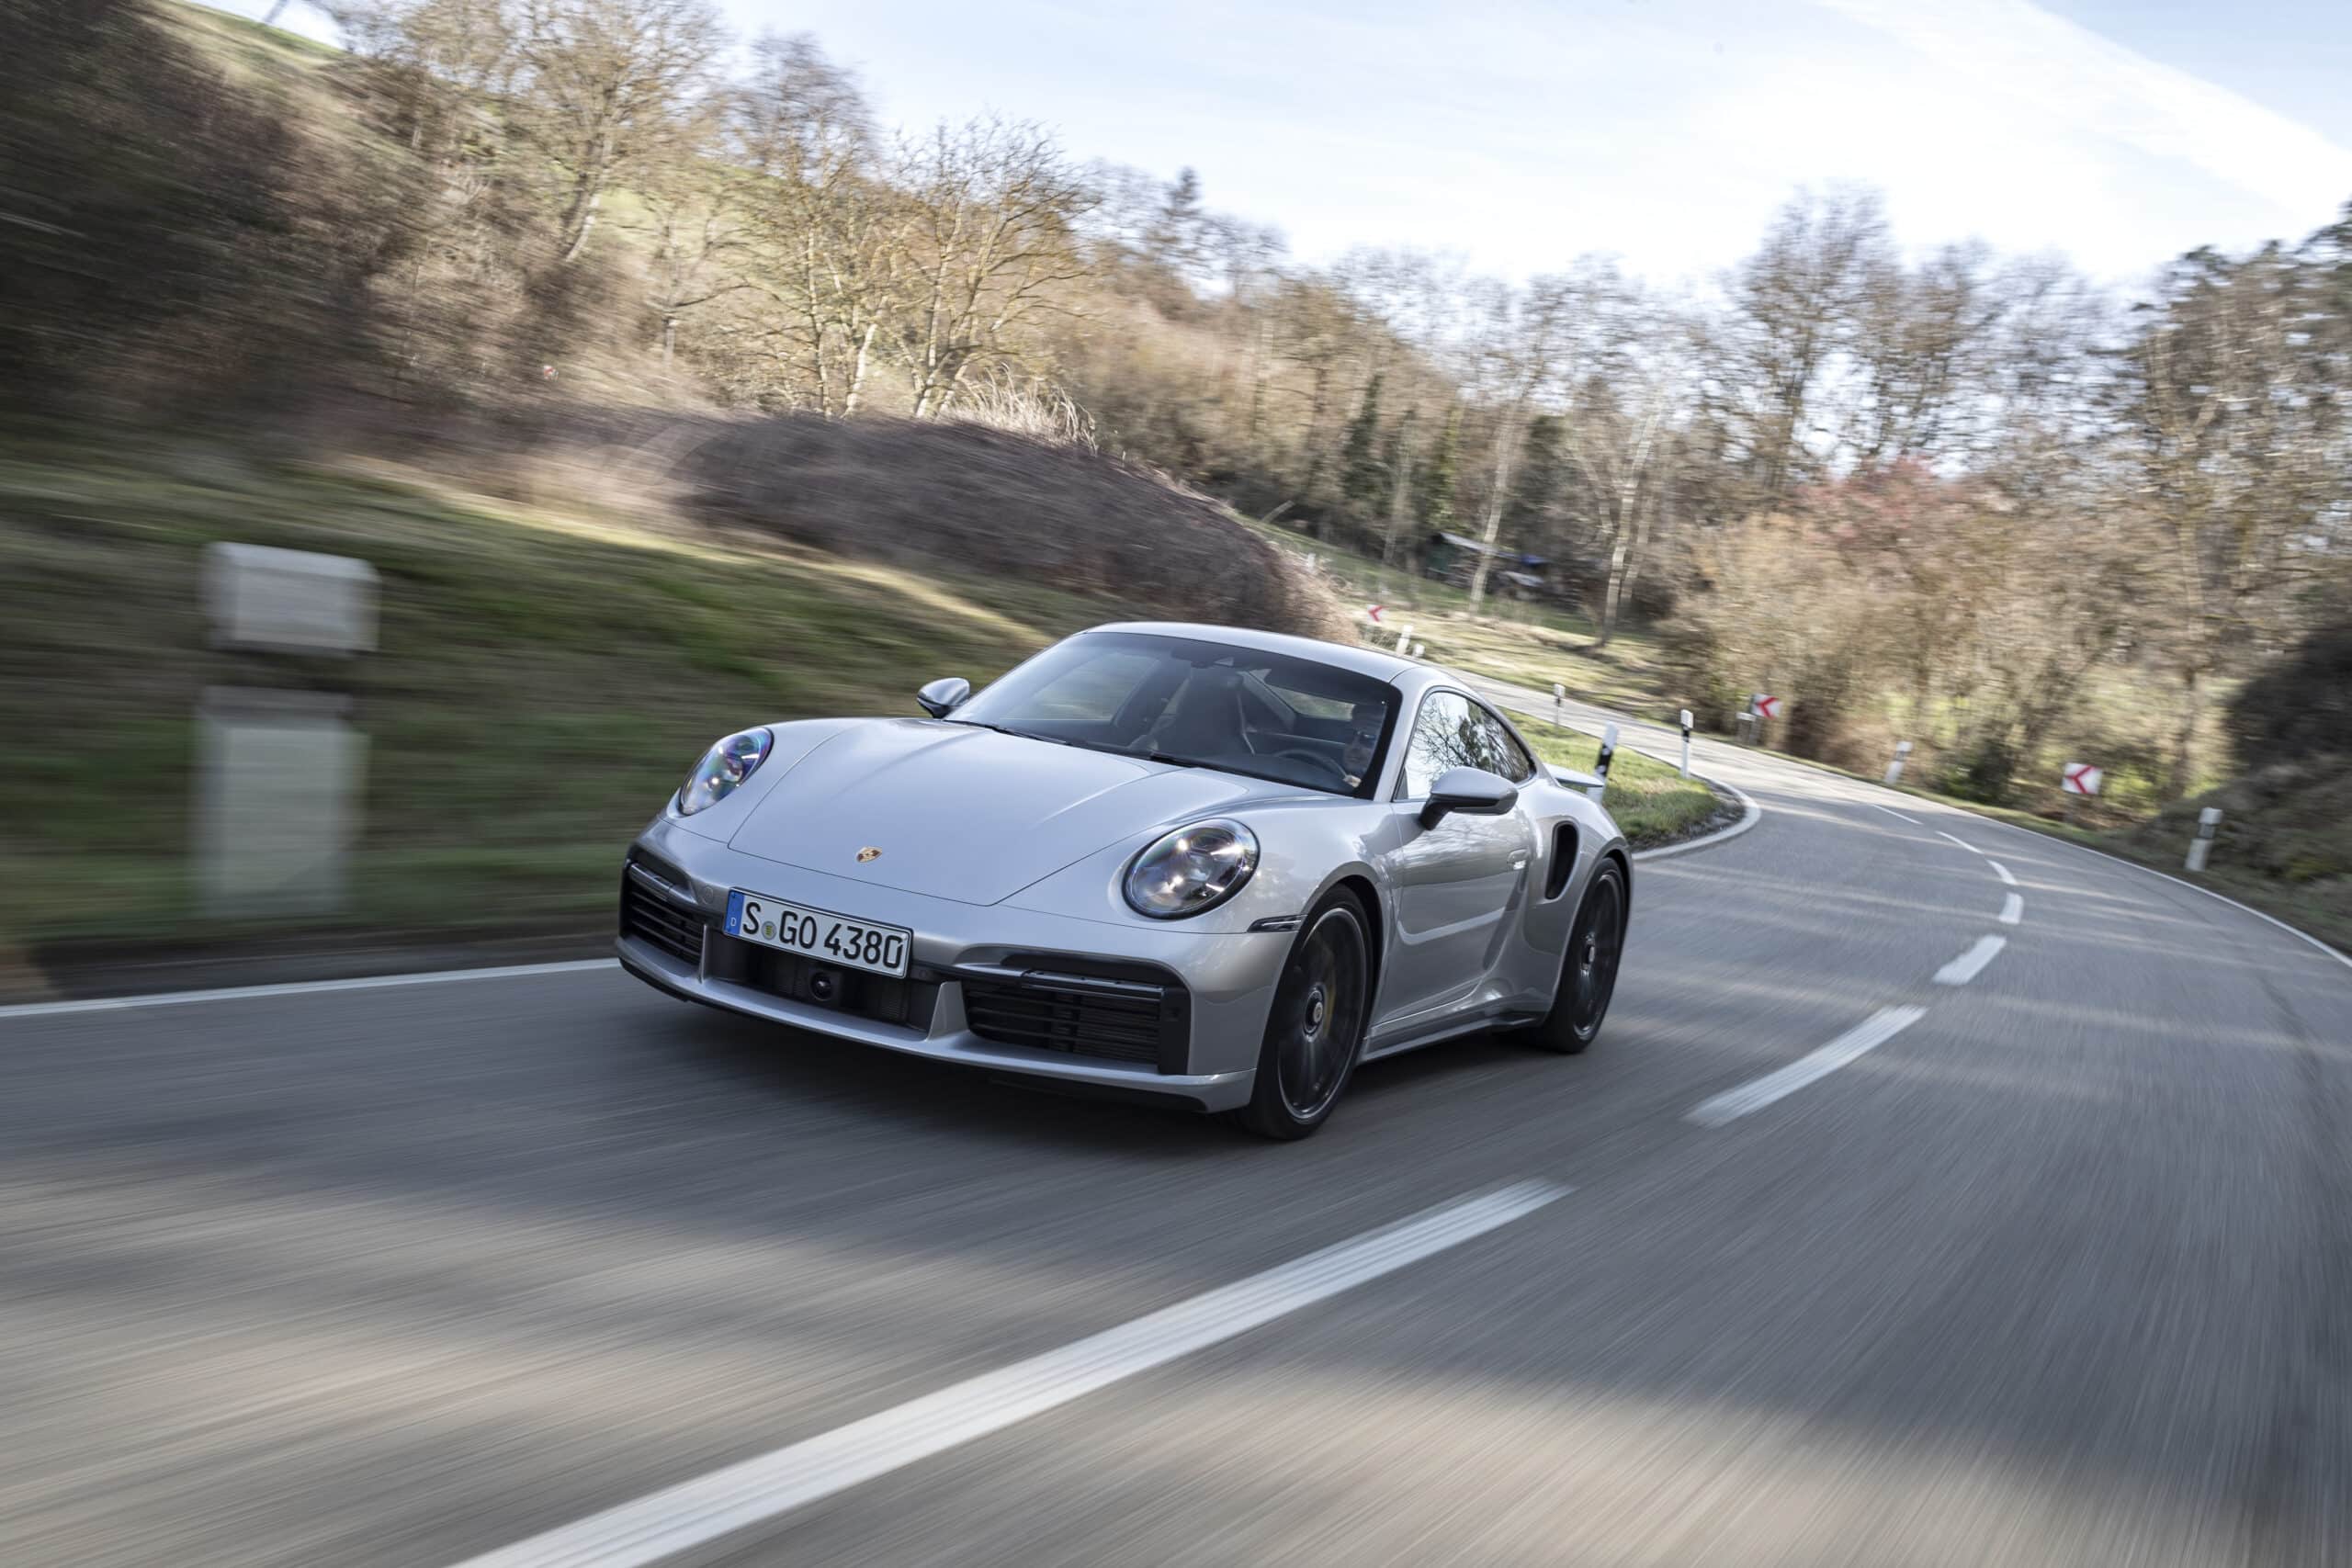 Porsche 911: The Last Roaring Symphony of the Combustion Era?